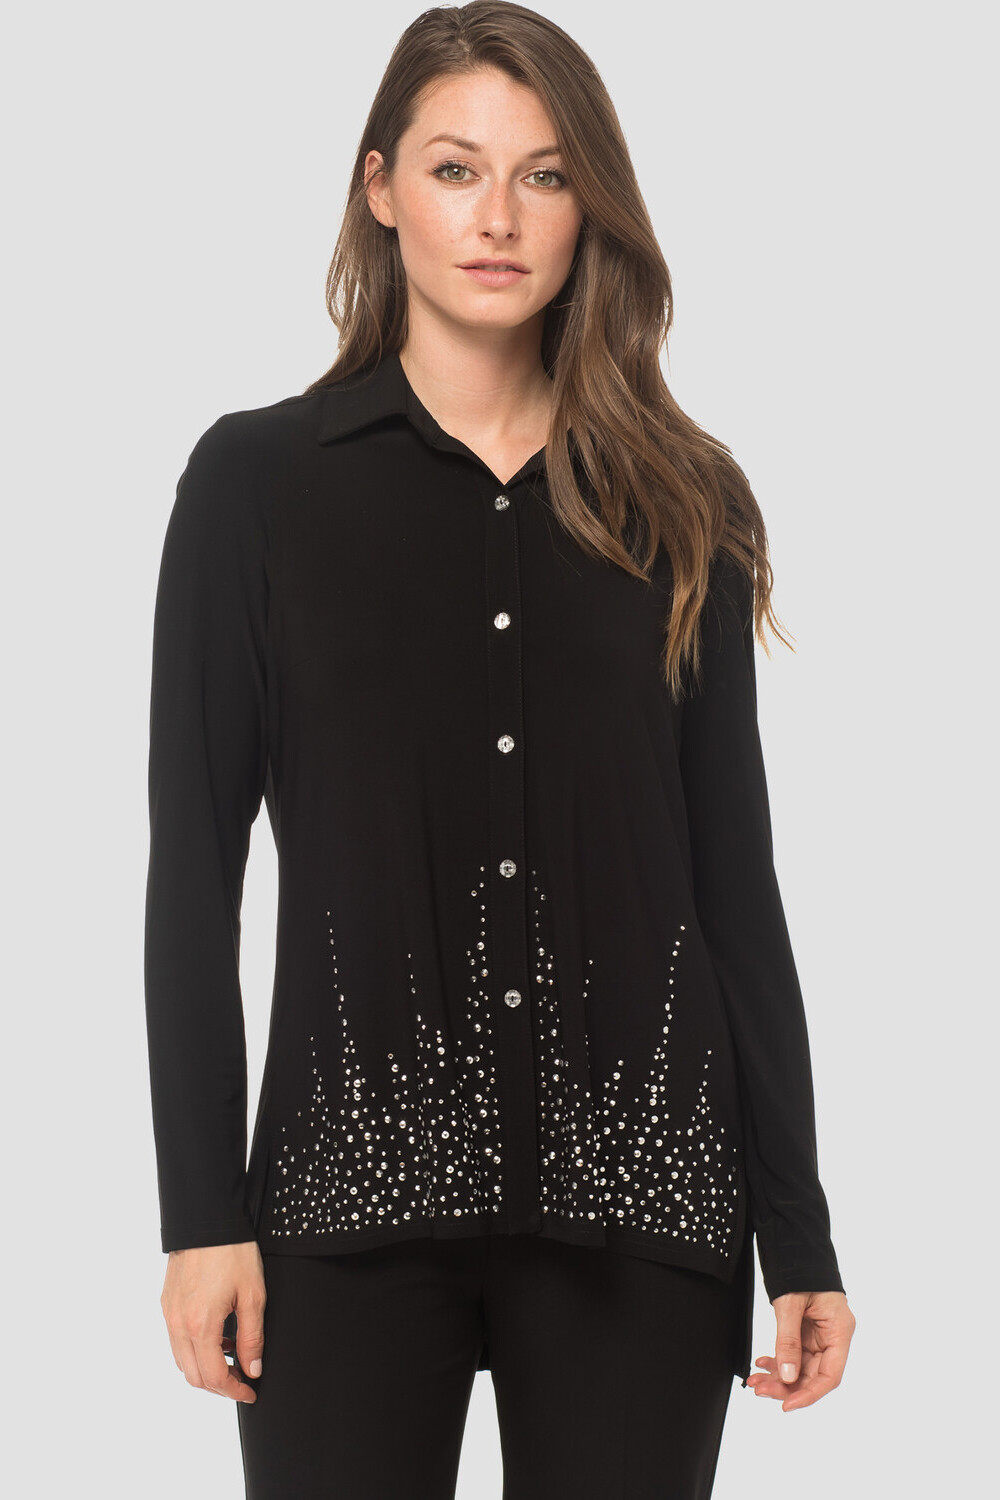 Joseph Ribkoff blouse style 183120X. Noir